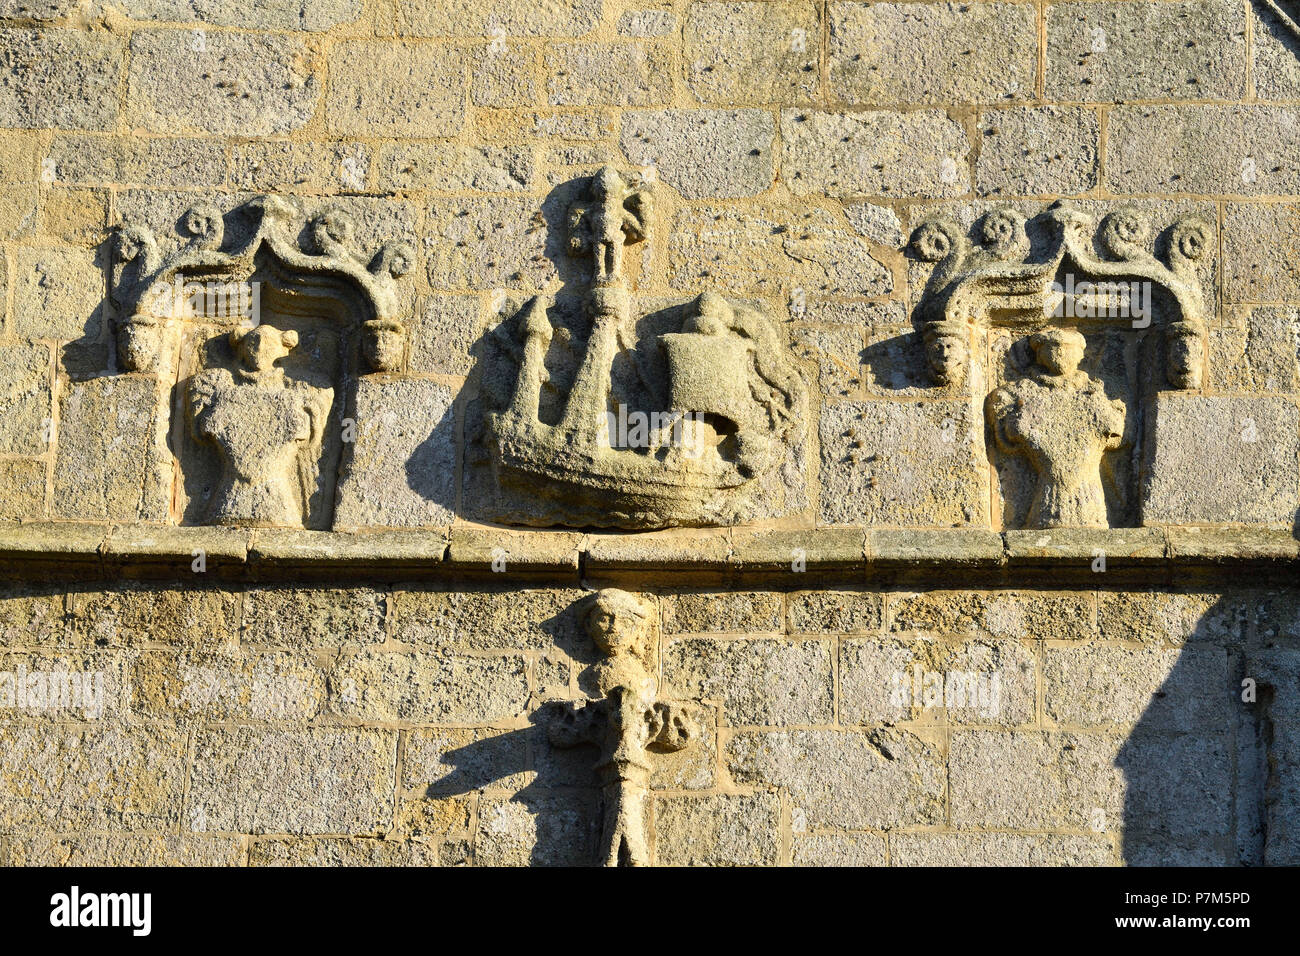 France, Finistere, Roscoff, caravel on the wall of Notre Dame de Croas Batz church Stock Photo